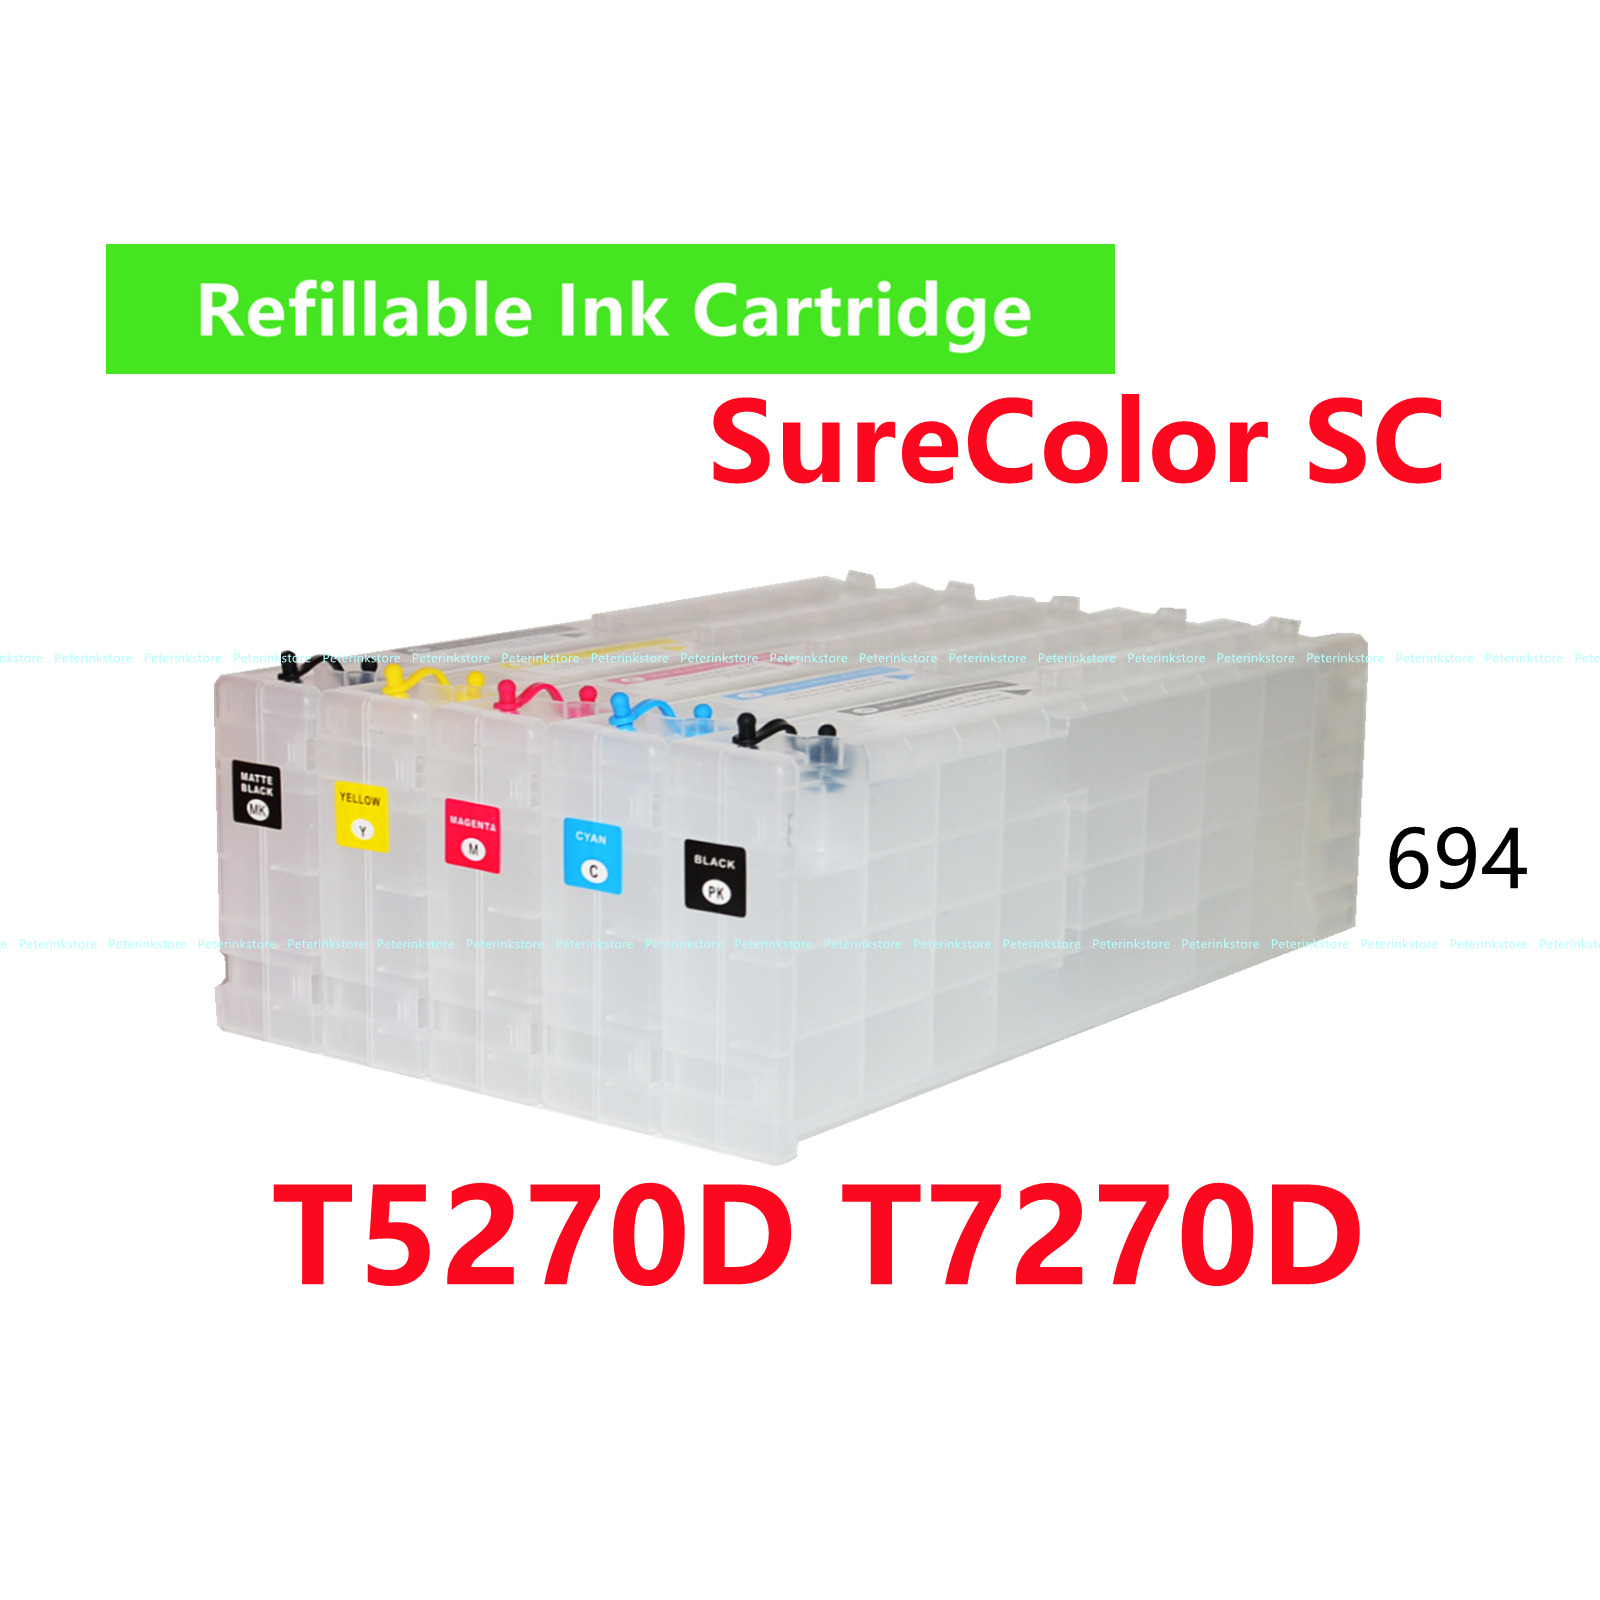 5 Empty Refillable Ink Cartridge T694 694 for T7270D T5270D Printer